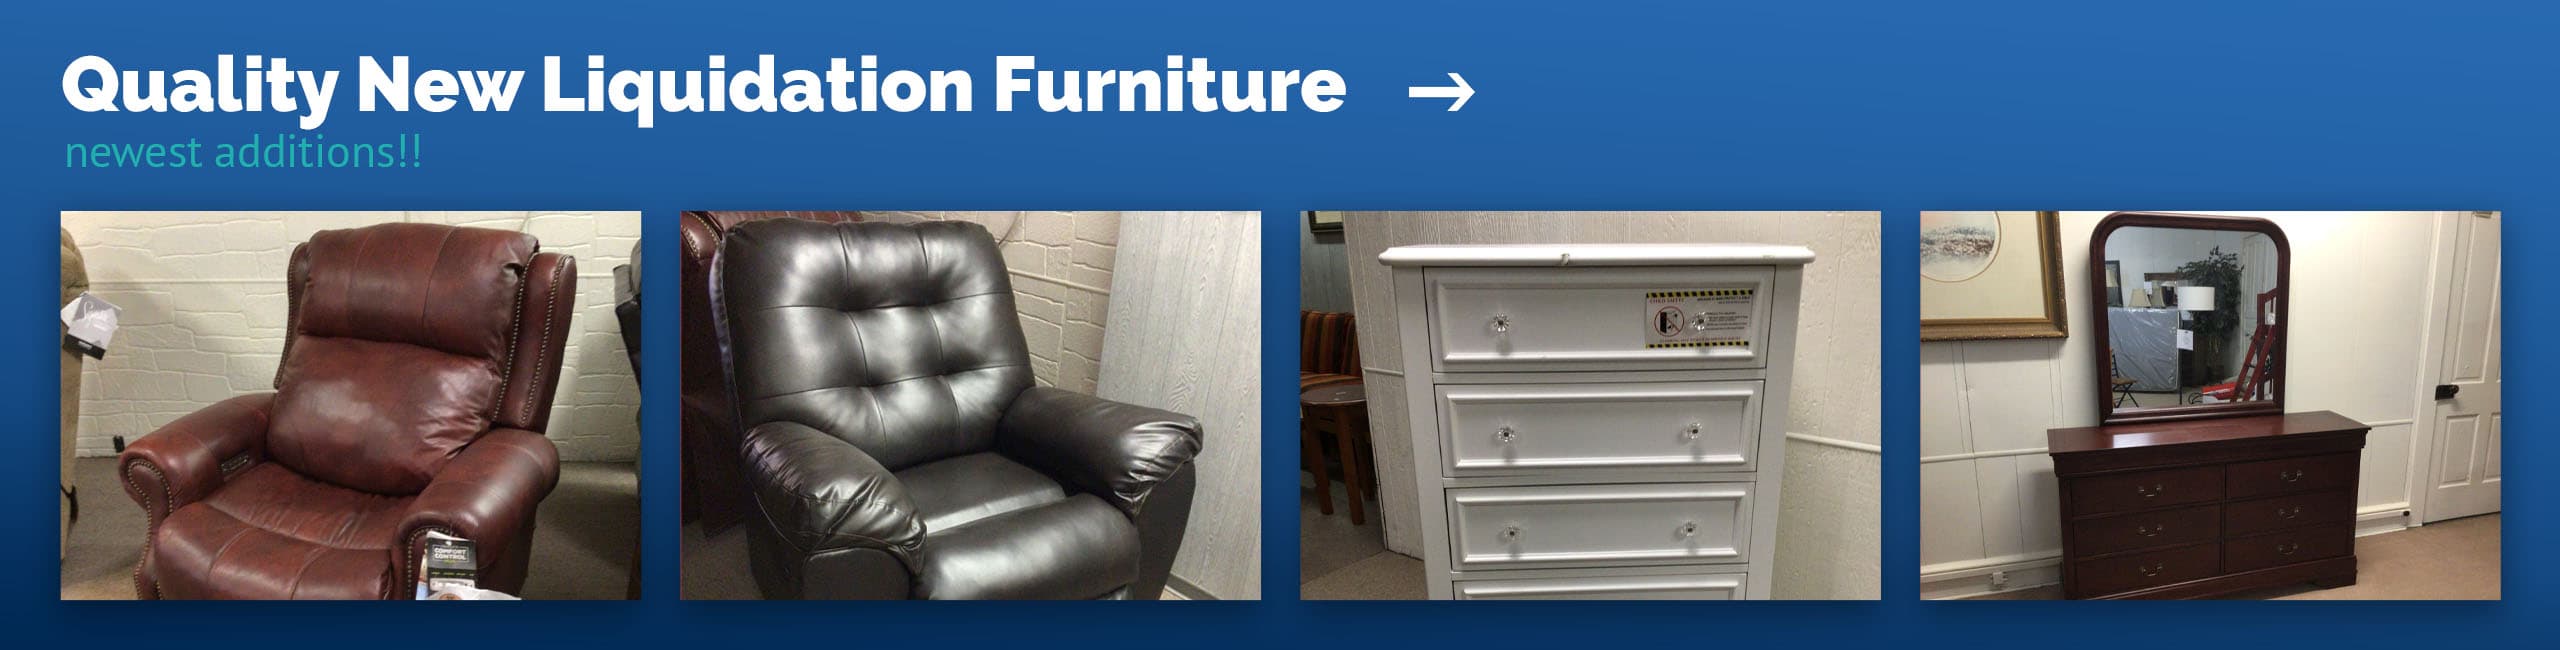 Quality New Liquidation Furniture